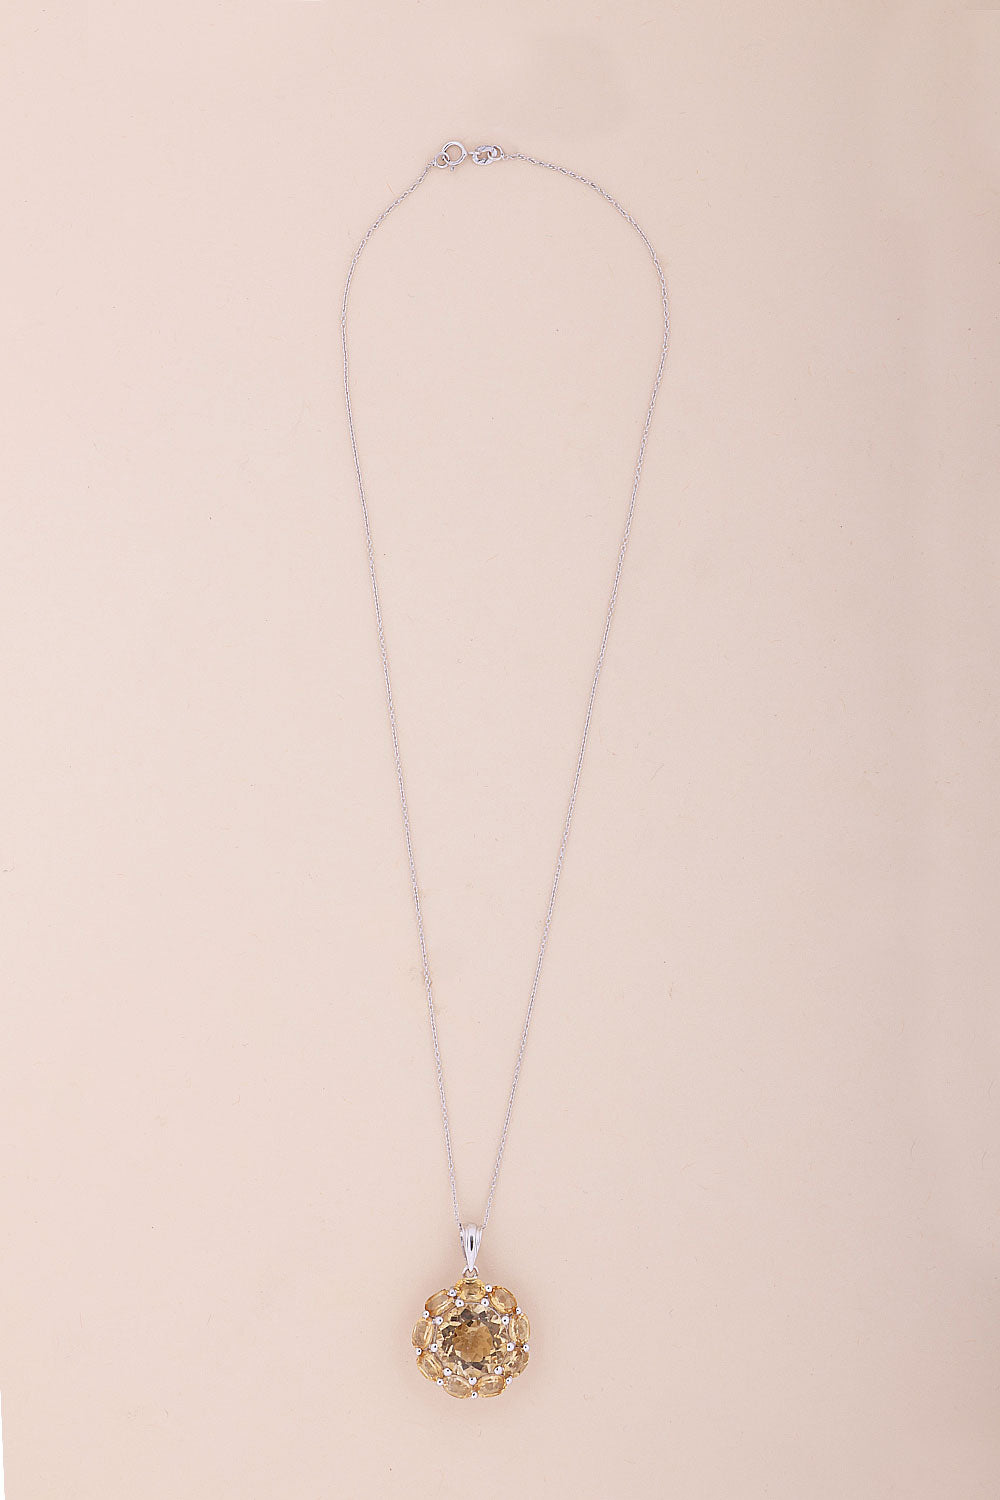 Citrine Sterling Silver Necklace Pendant Chain - Avishya